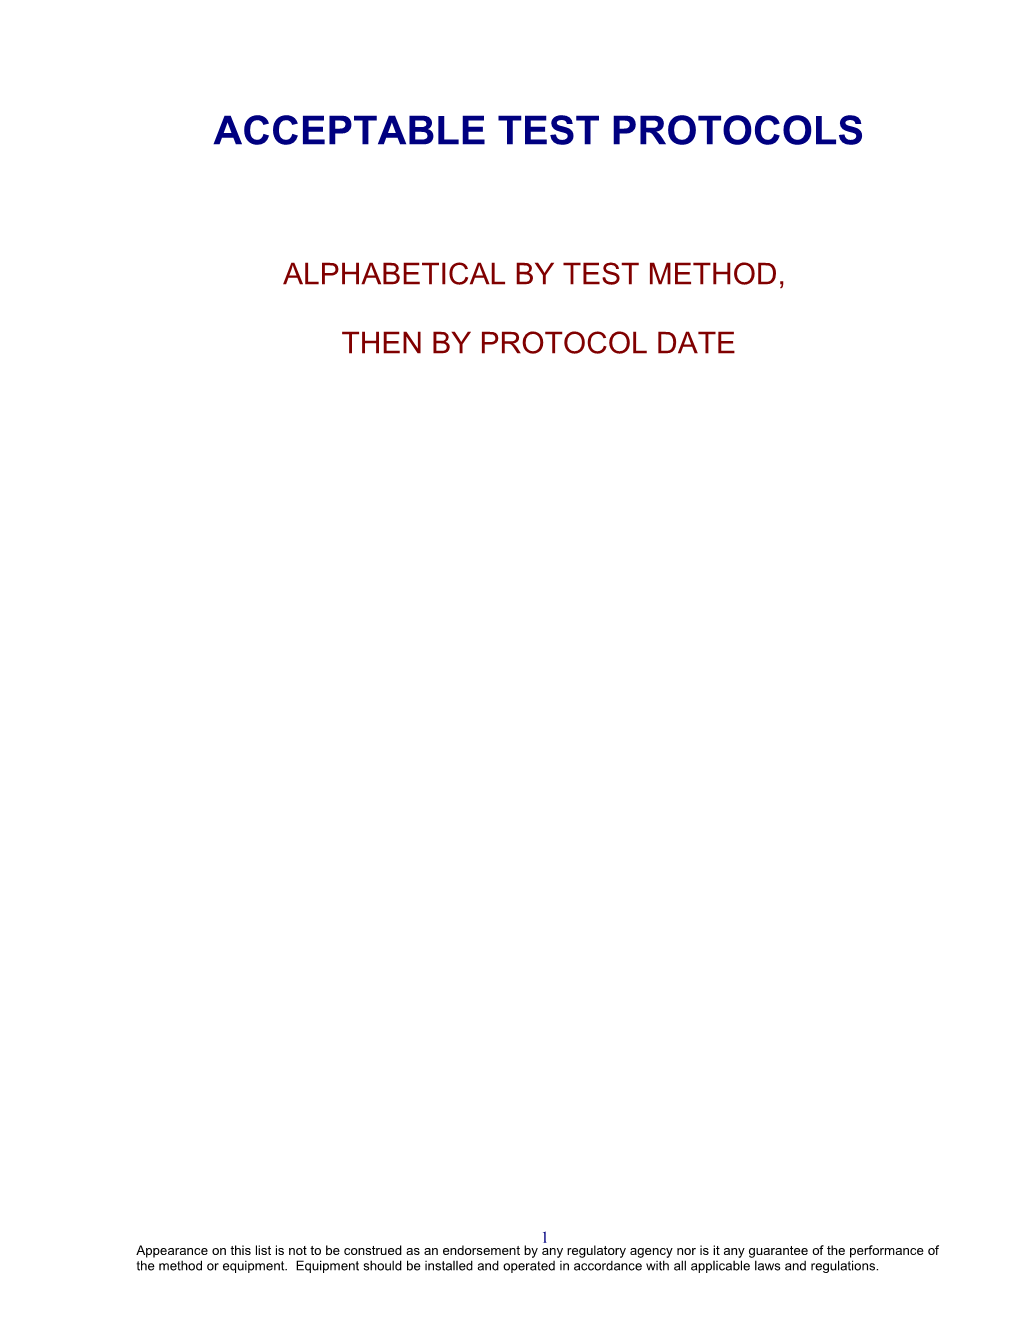 Acceptable Test Protocols